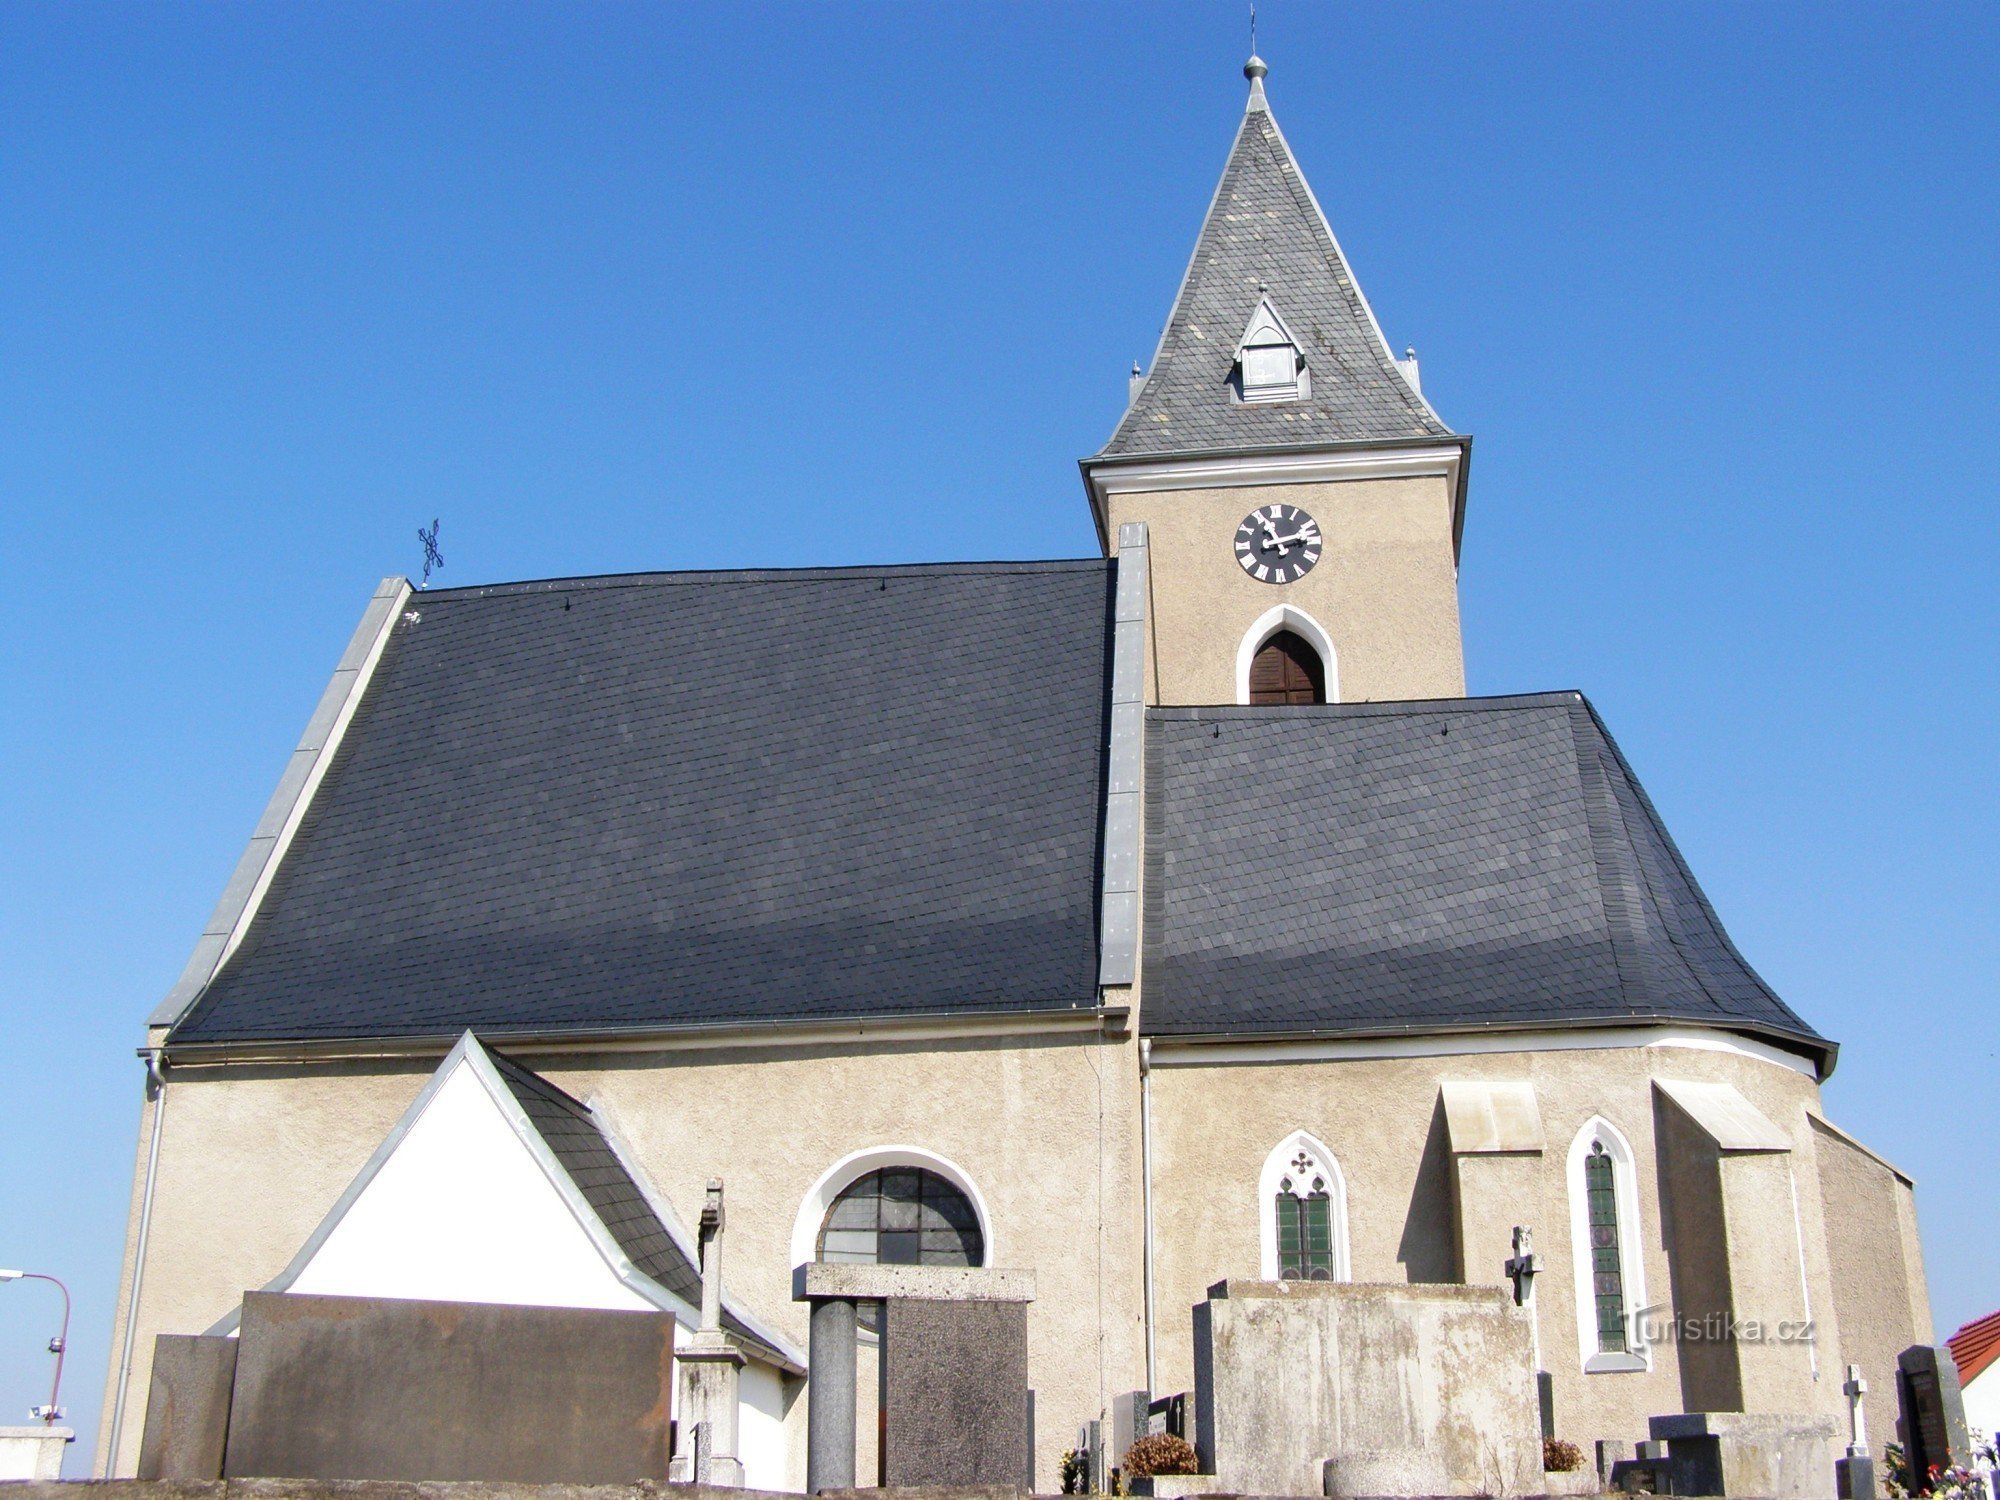 Dríteč - biserica Sf. Petru și Pavel